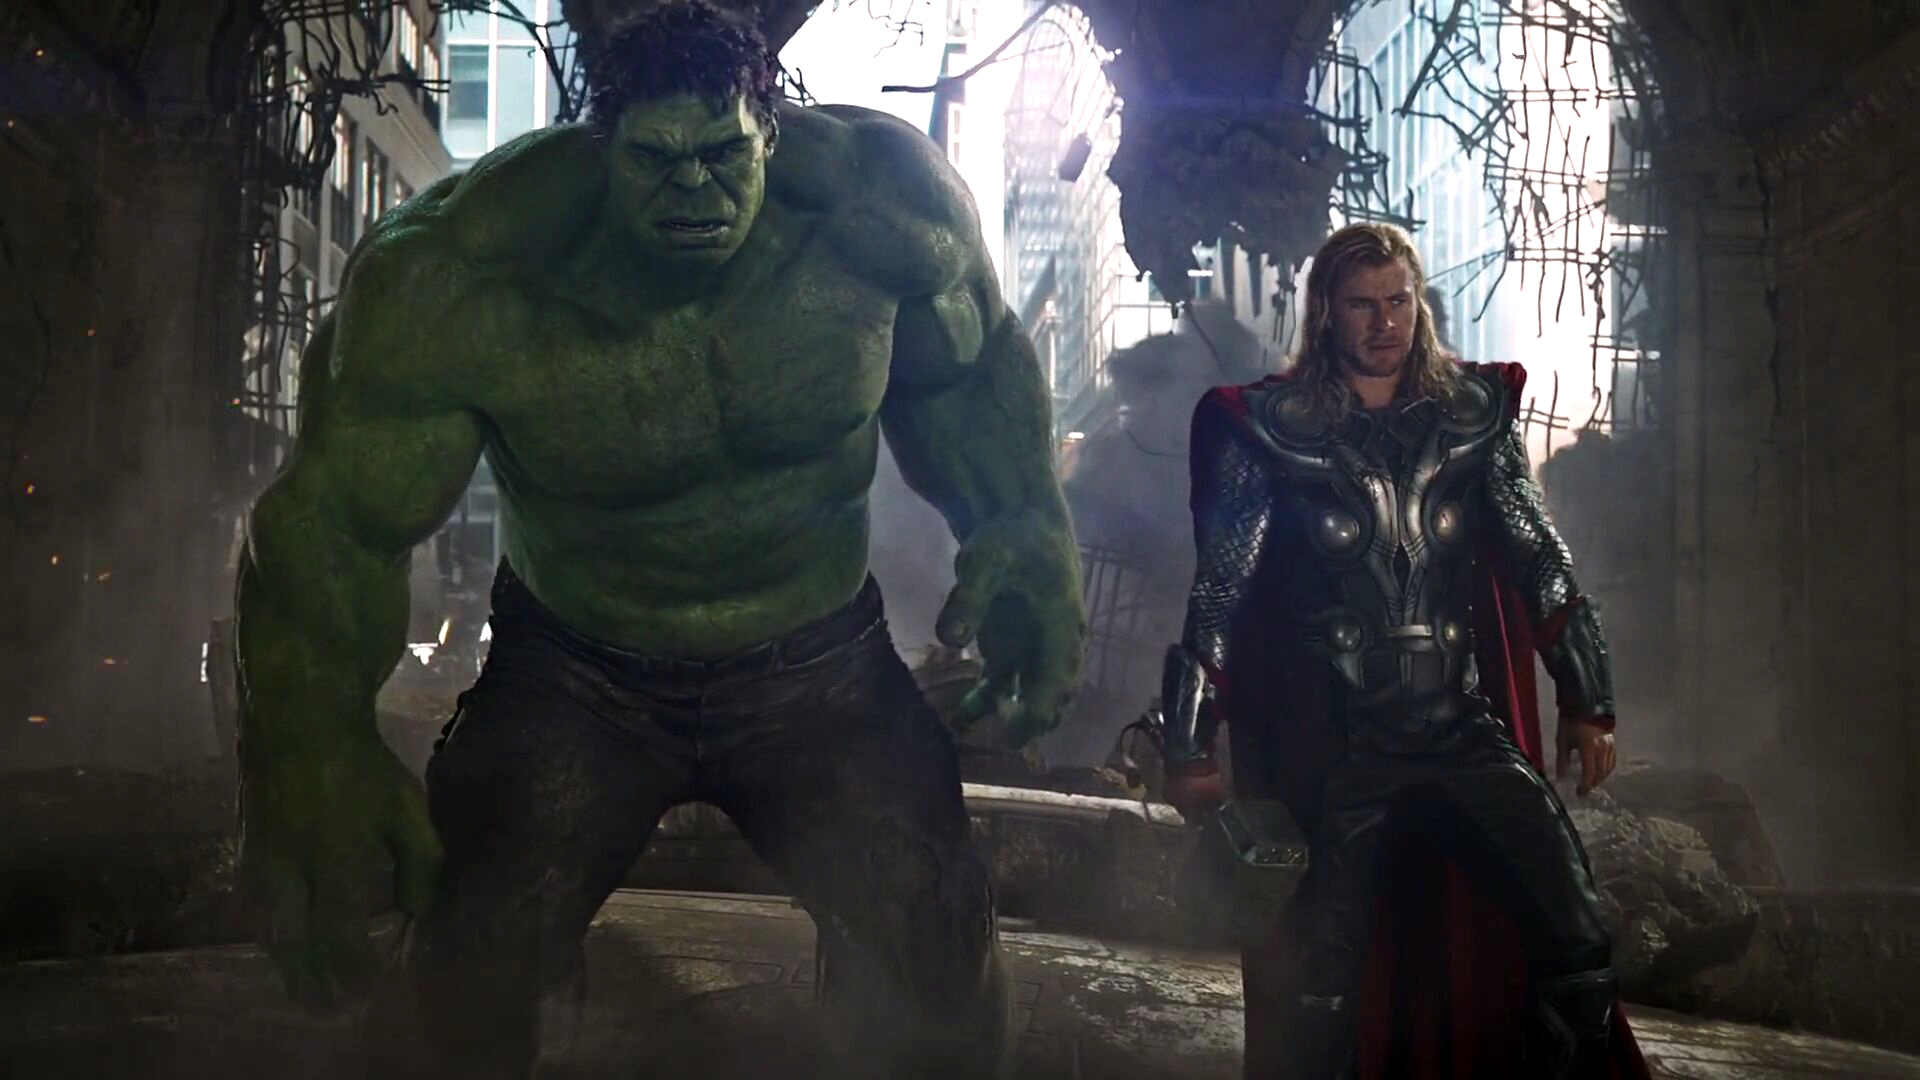 Gerucht: The Hulk keert terug in 'Thor: Ragnarok'